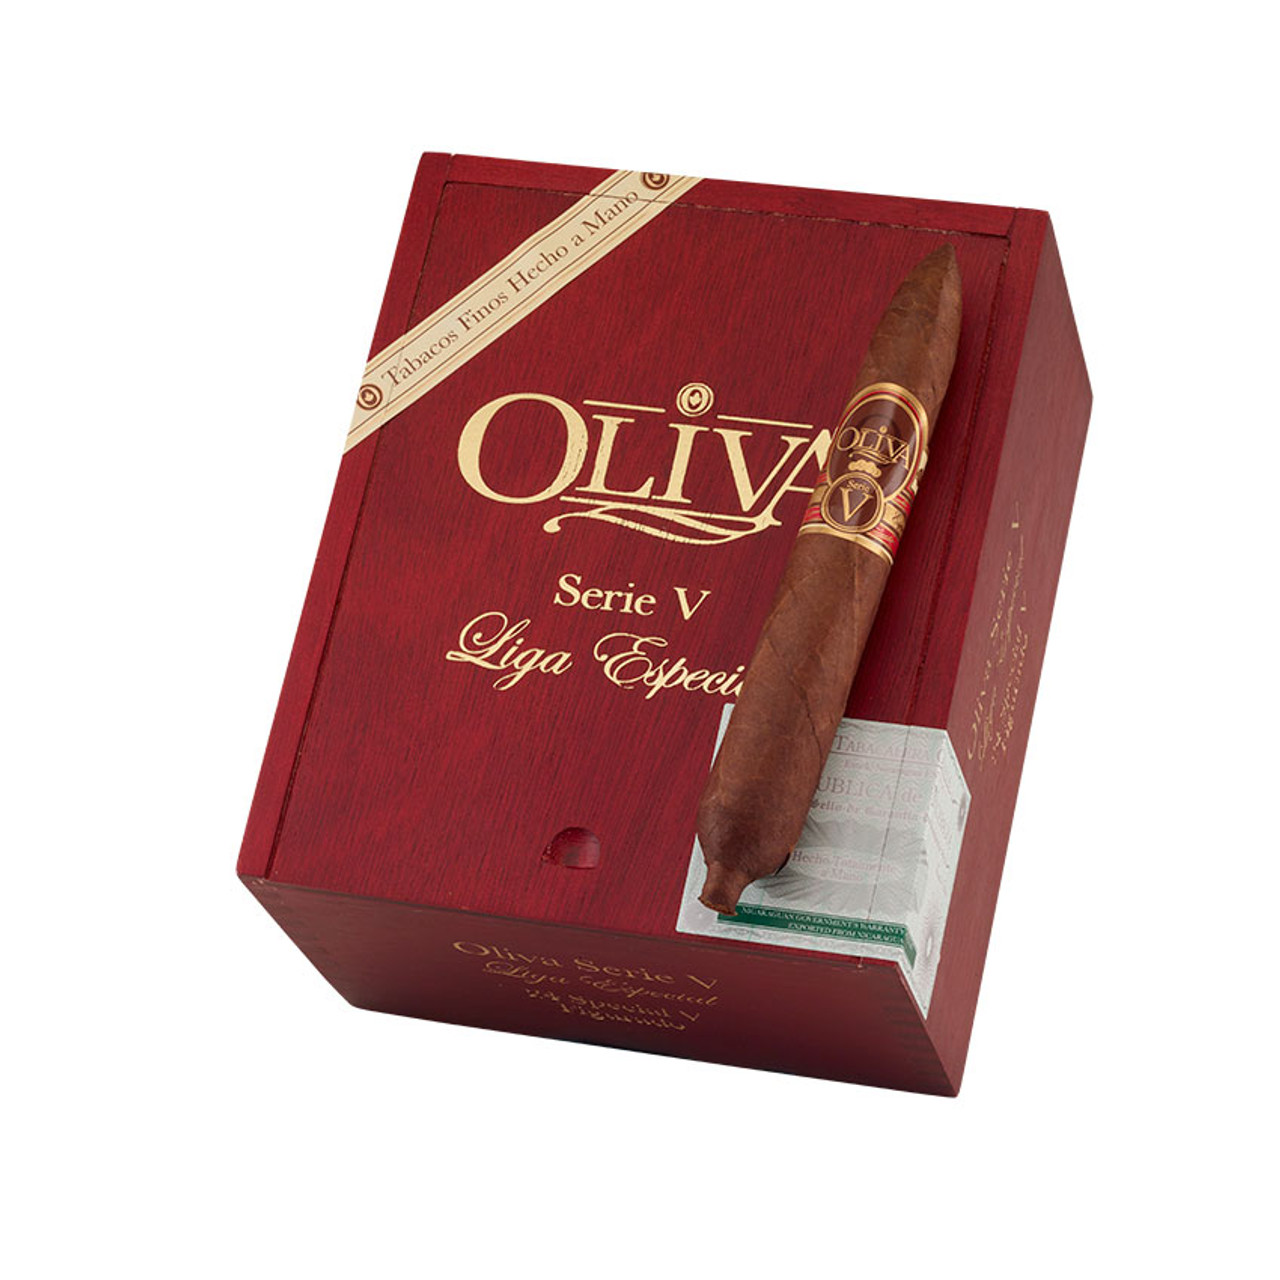 Oliva Serie V Special Figurado Cigars - 6 x 60 (Box of 24) *Box